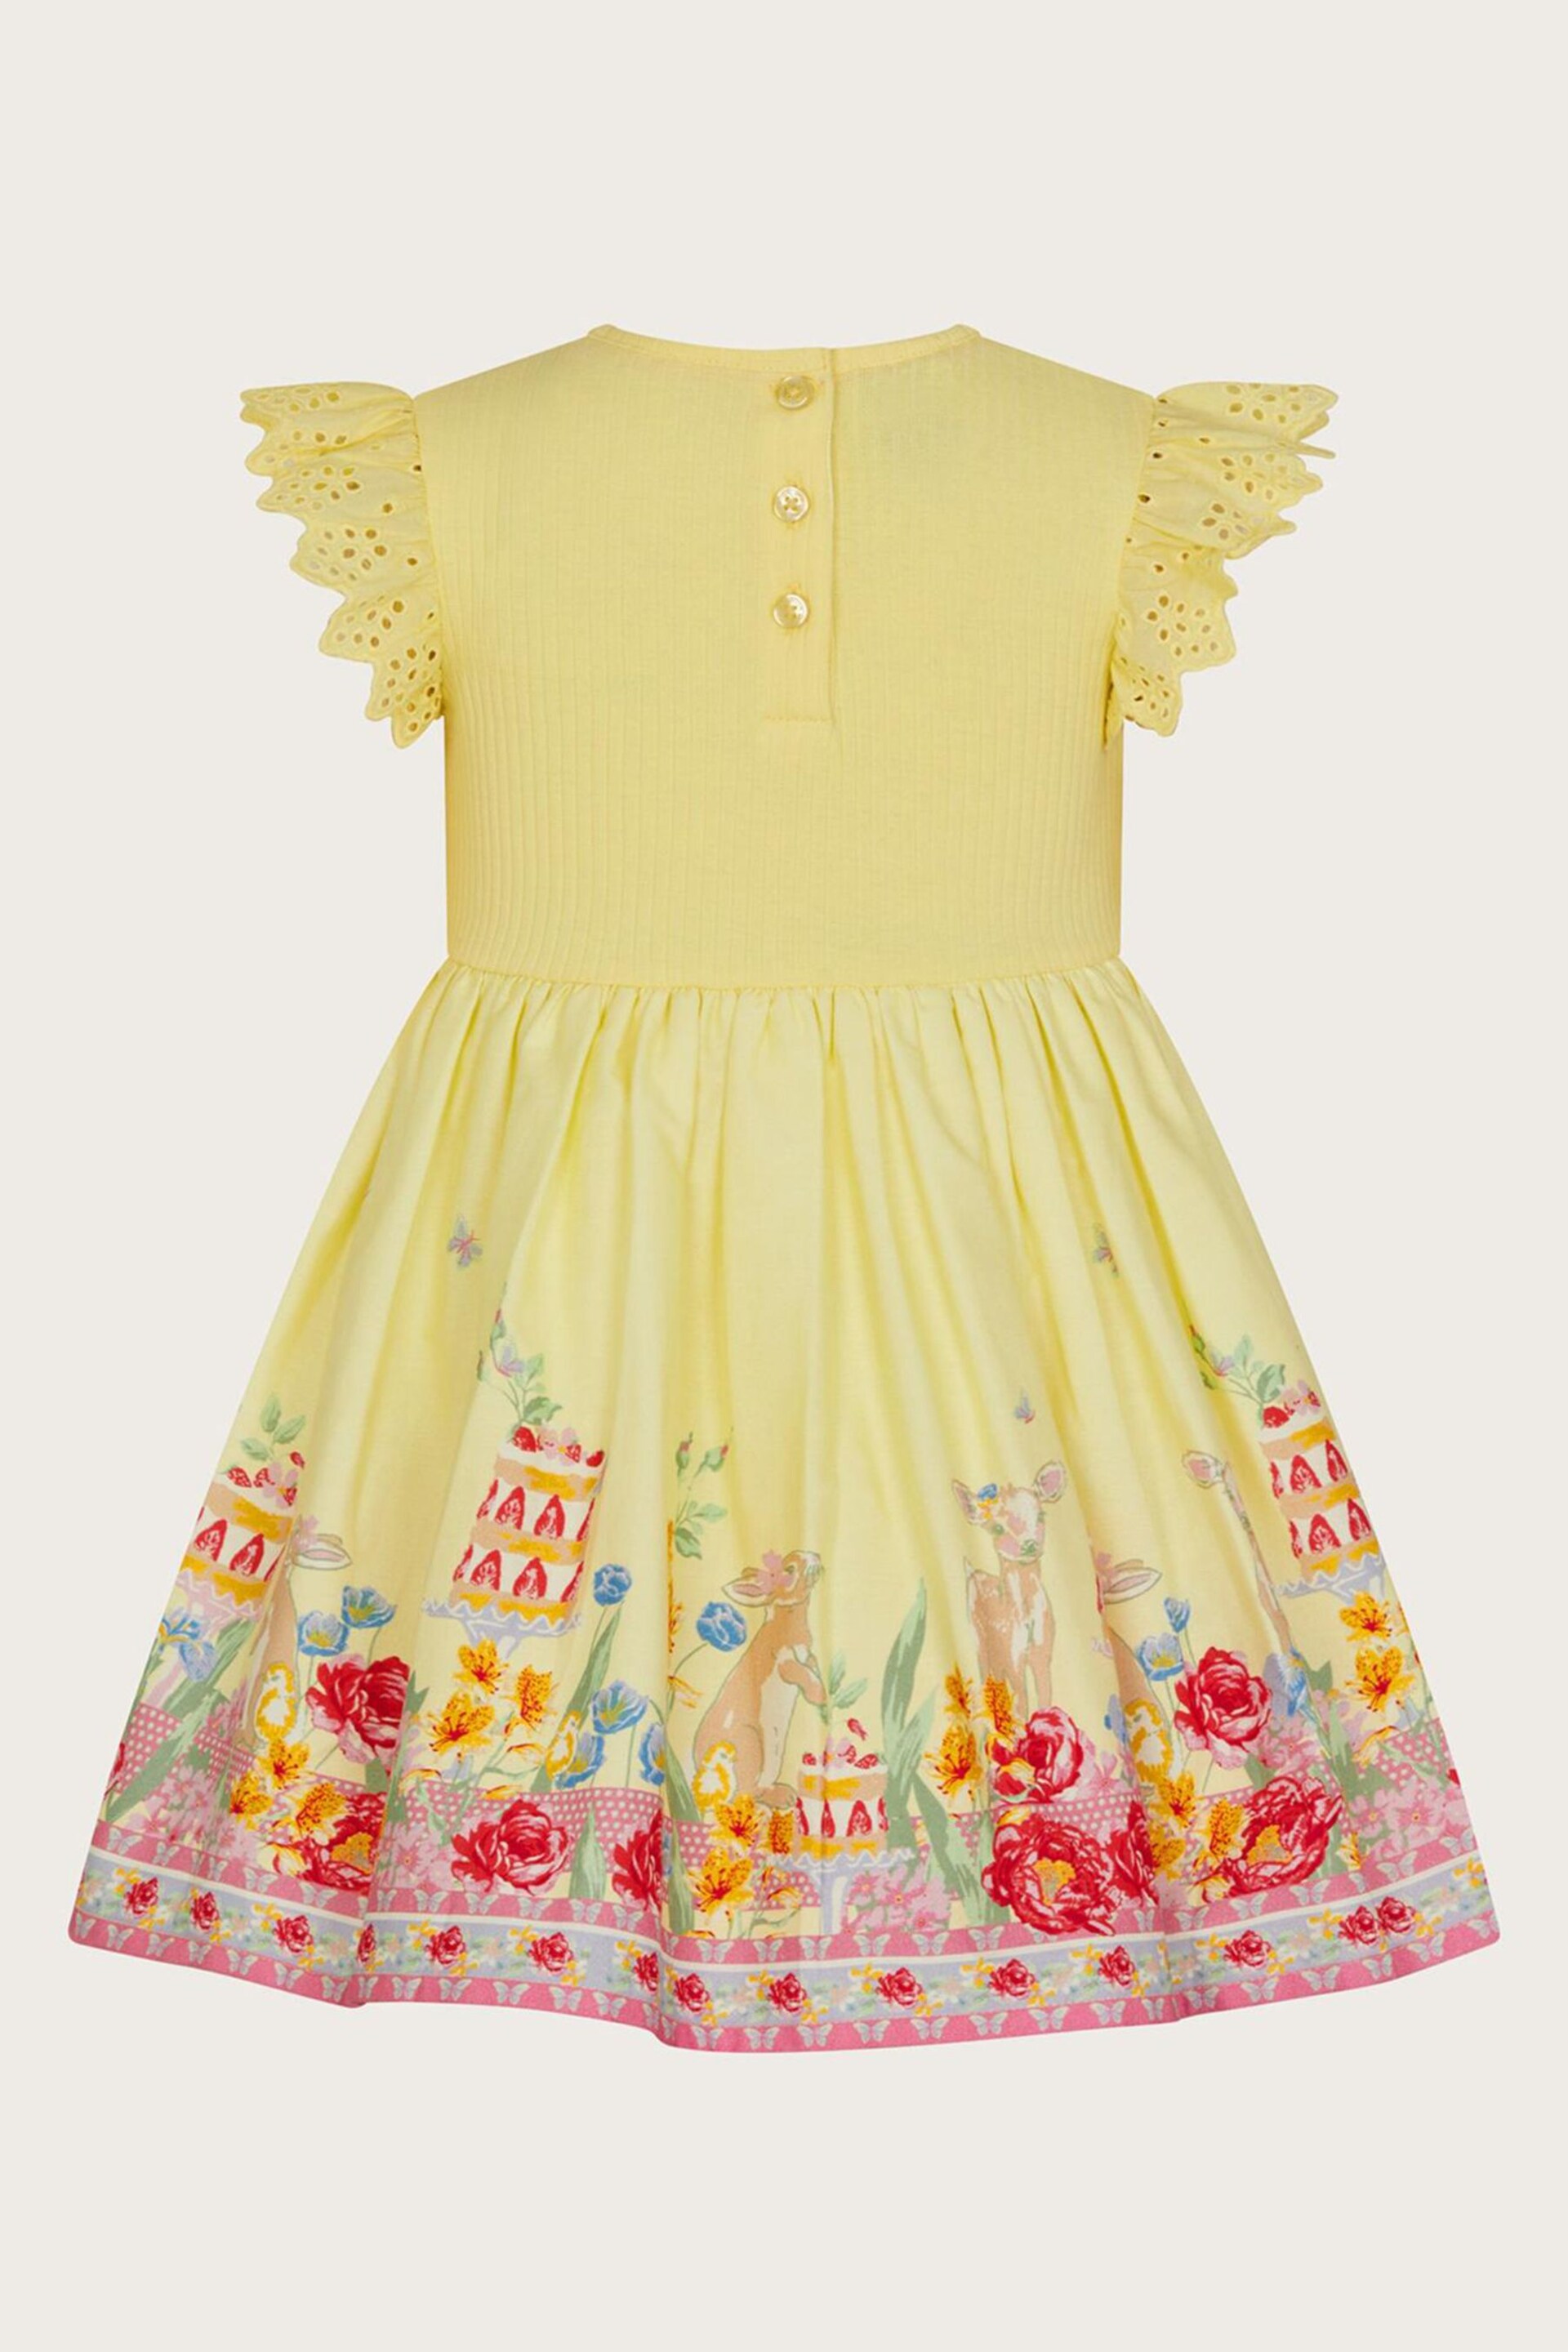 Monsoon Yellow 2-in-1 Tea Dress - Image 3 of 4